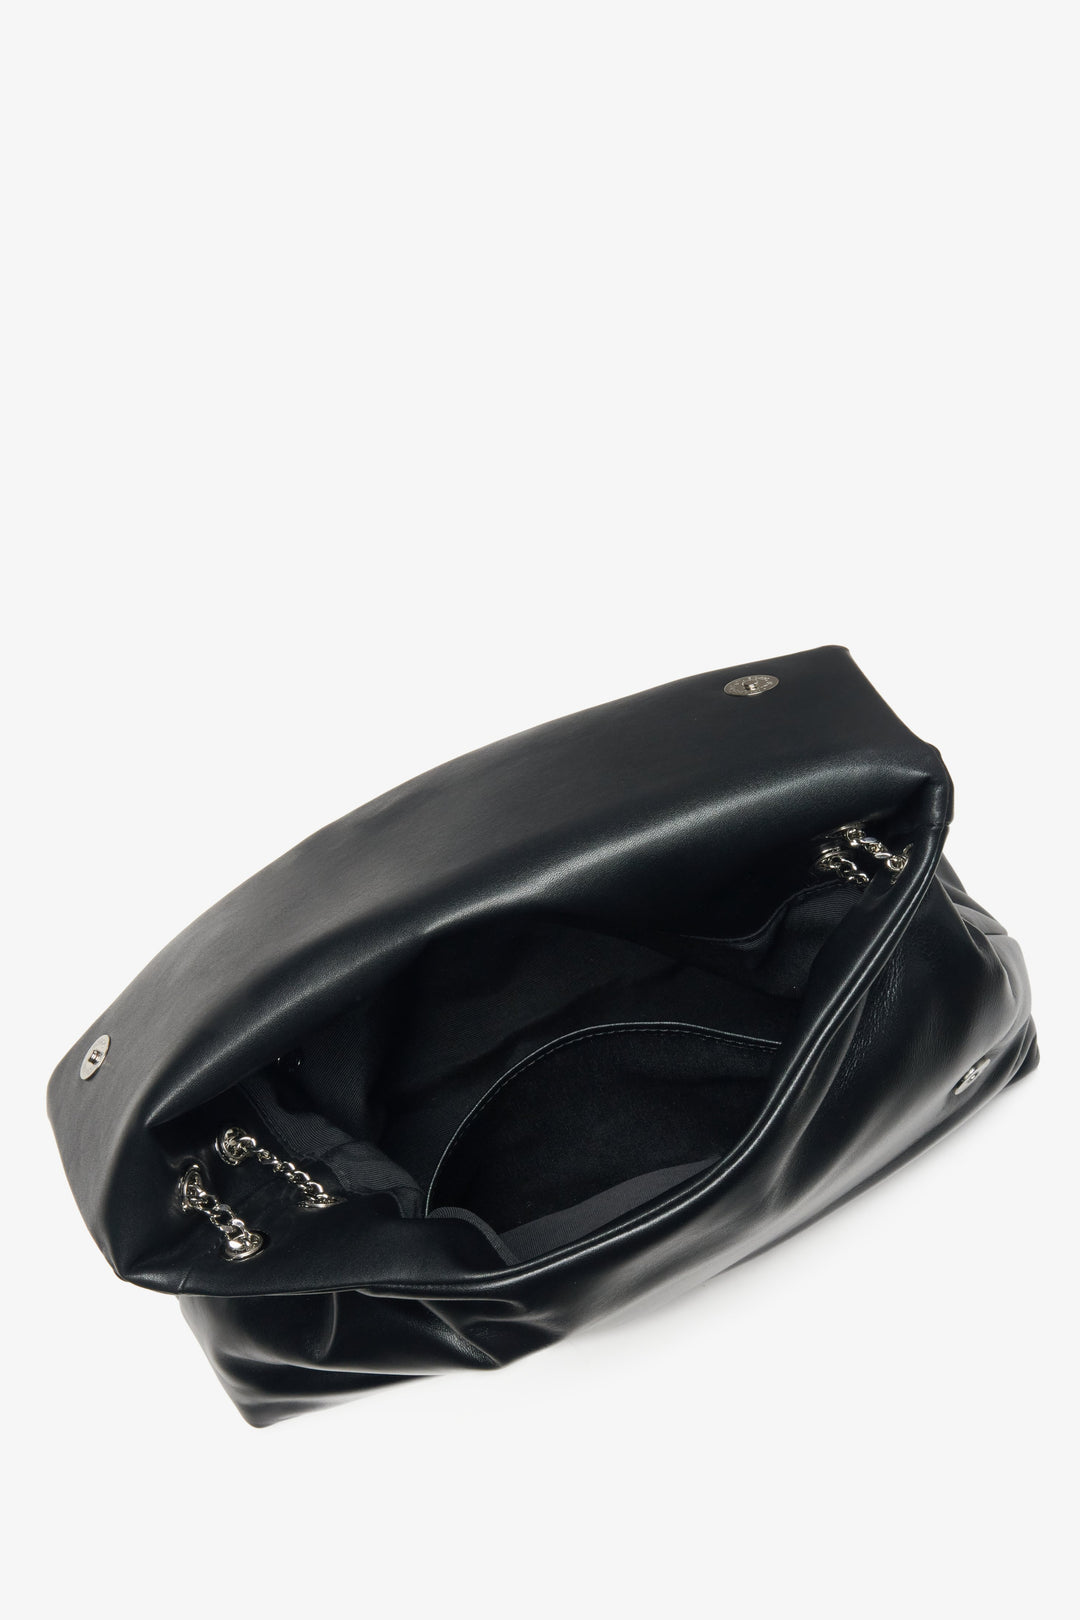 Women's black leather  handbag Estro - interior close-up.